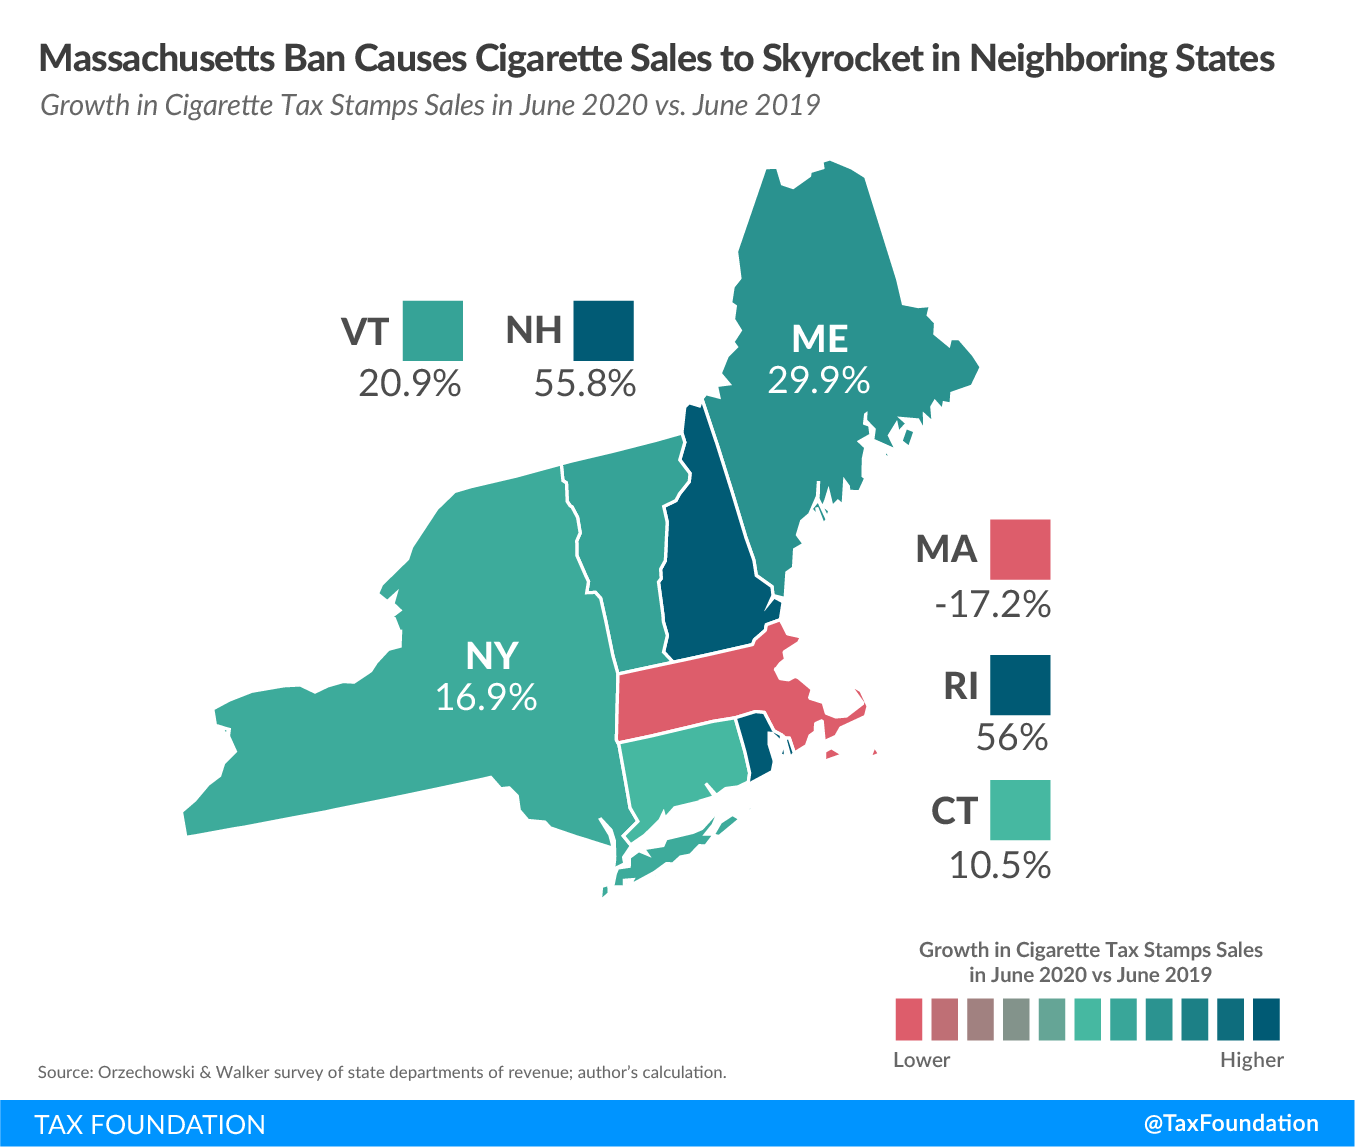 Massachusetts ban on flavored cigarettes, Massachusetts ban on flavored tobacco